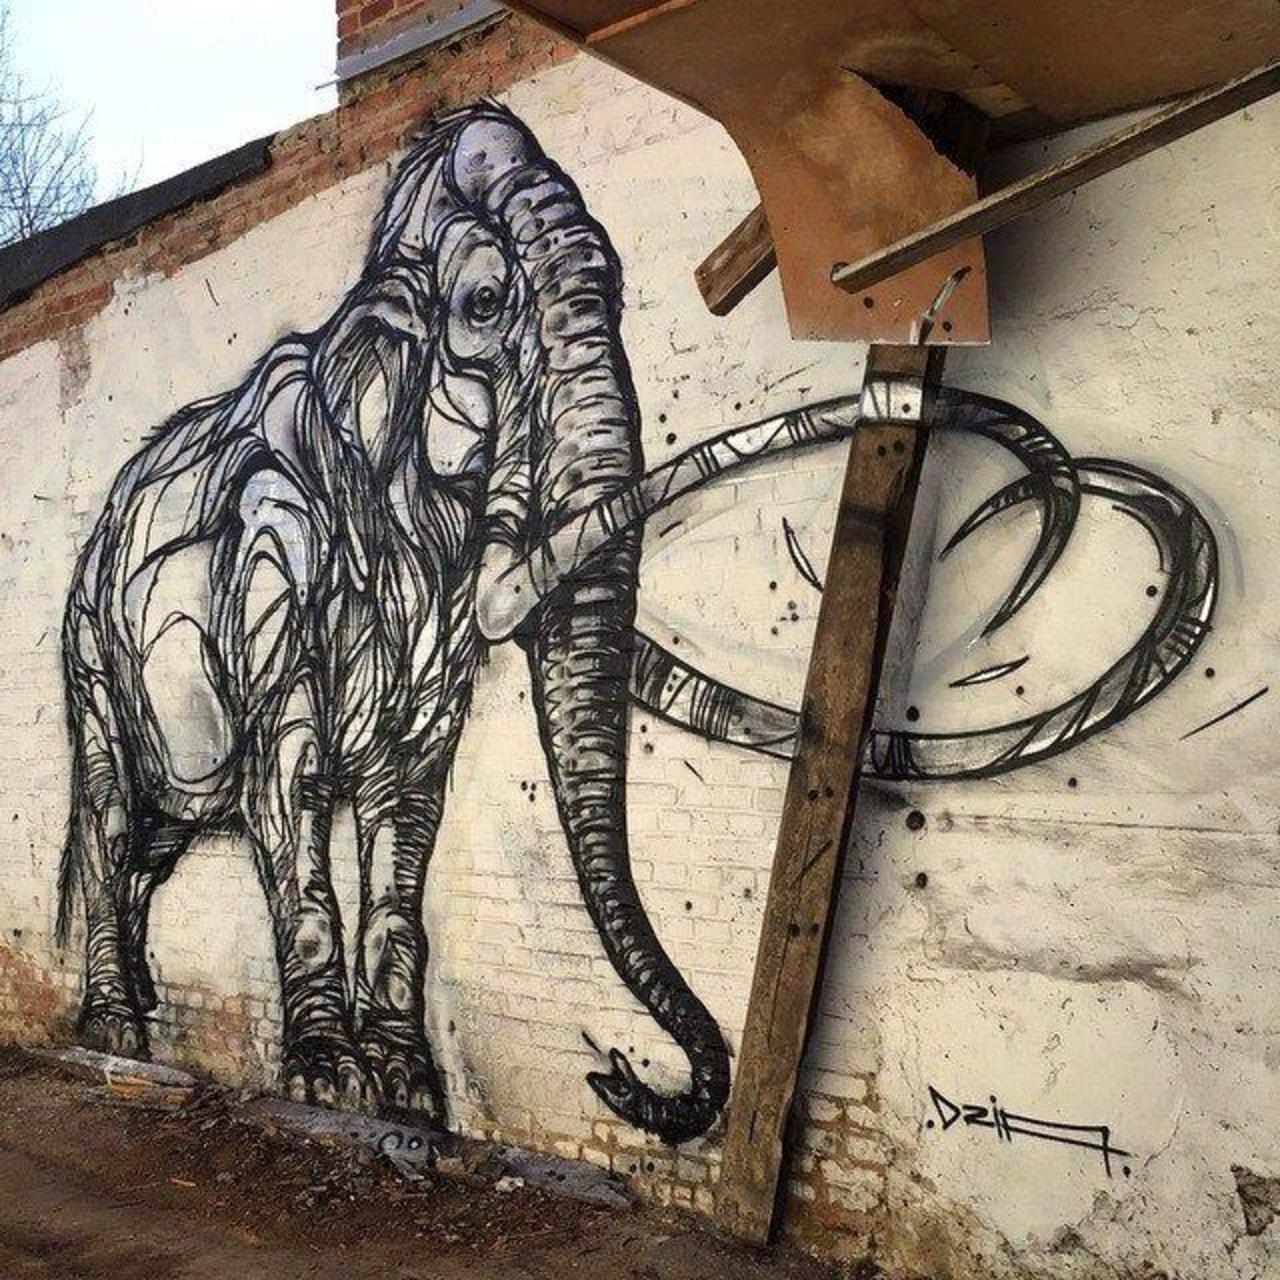 Mammoth. New nature in Street Art wall by DZIA 

#art #graffiti #mural #streetart http://t.co/ImBpf8dCv1